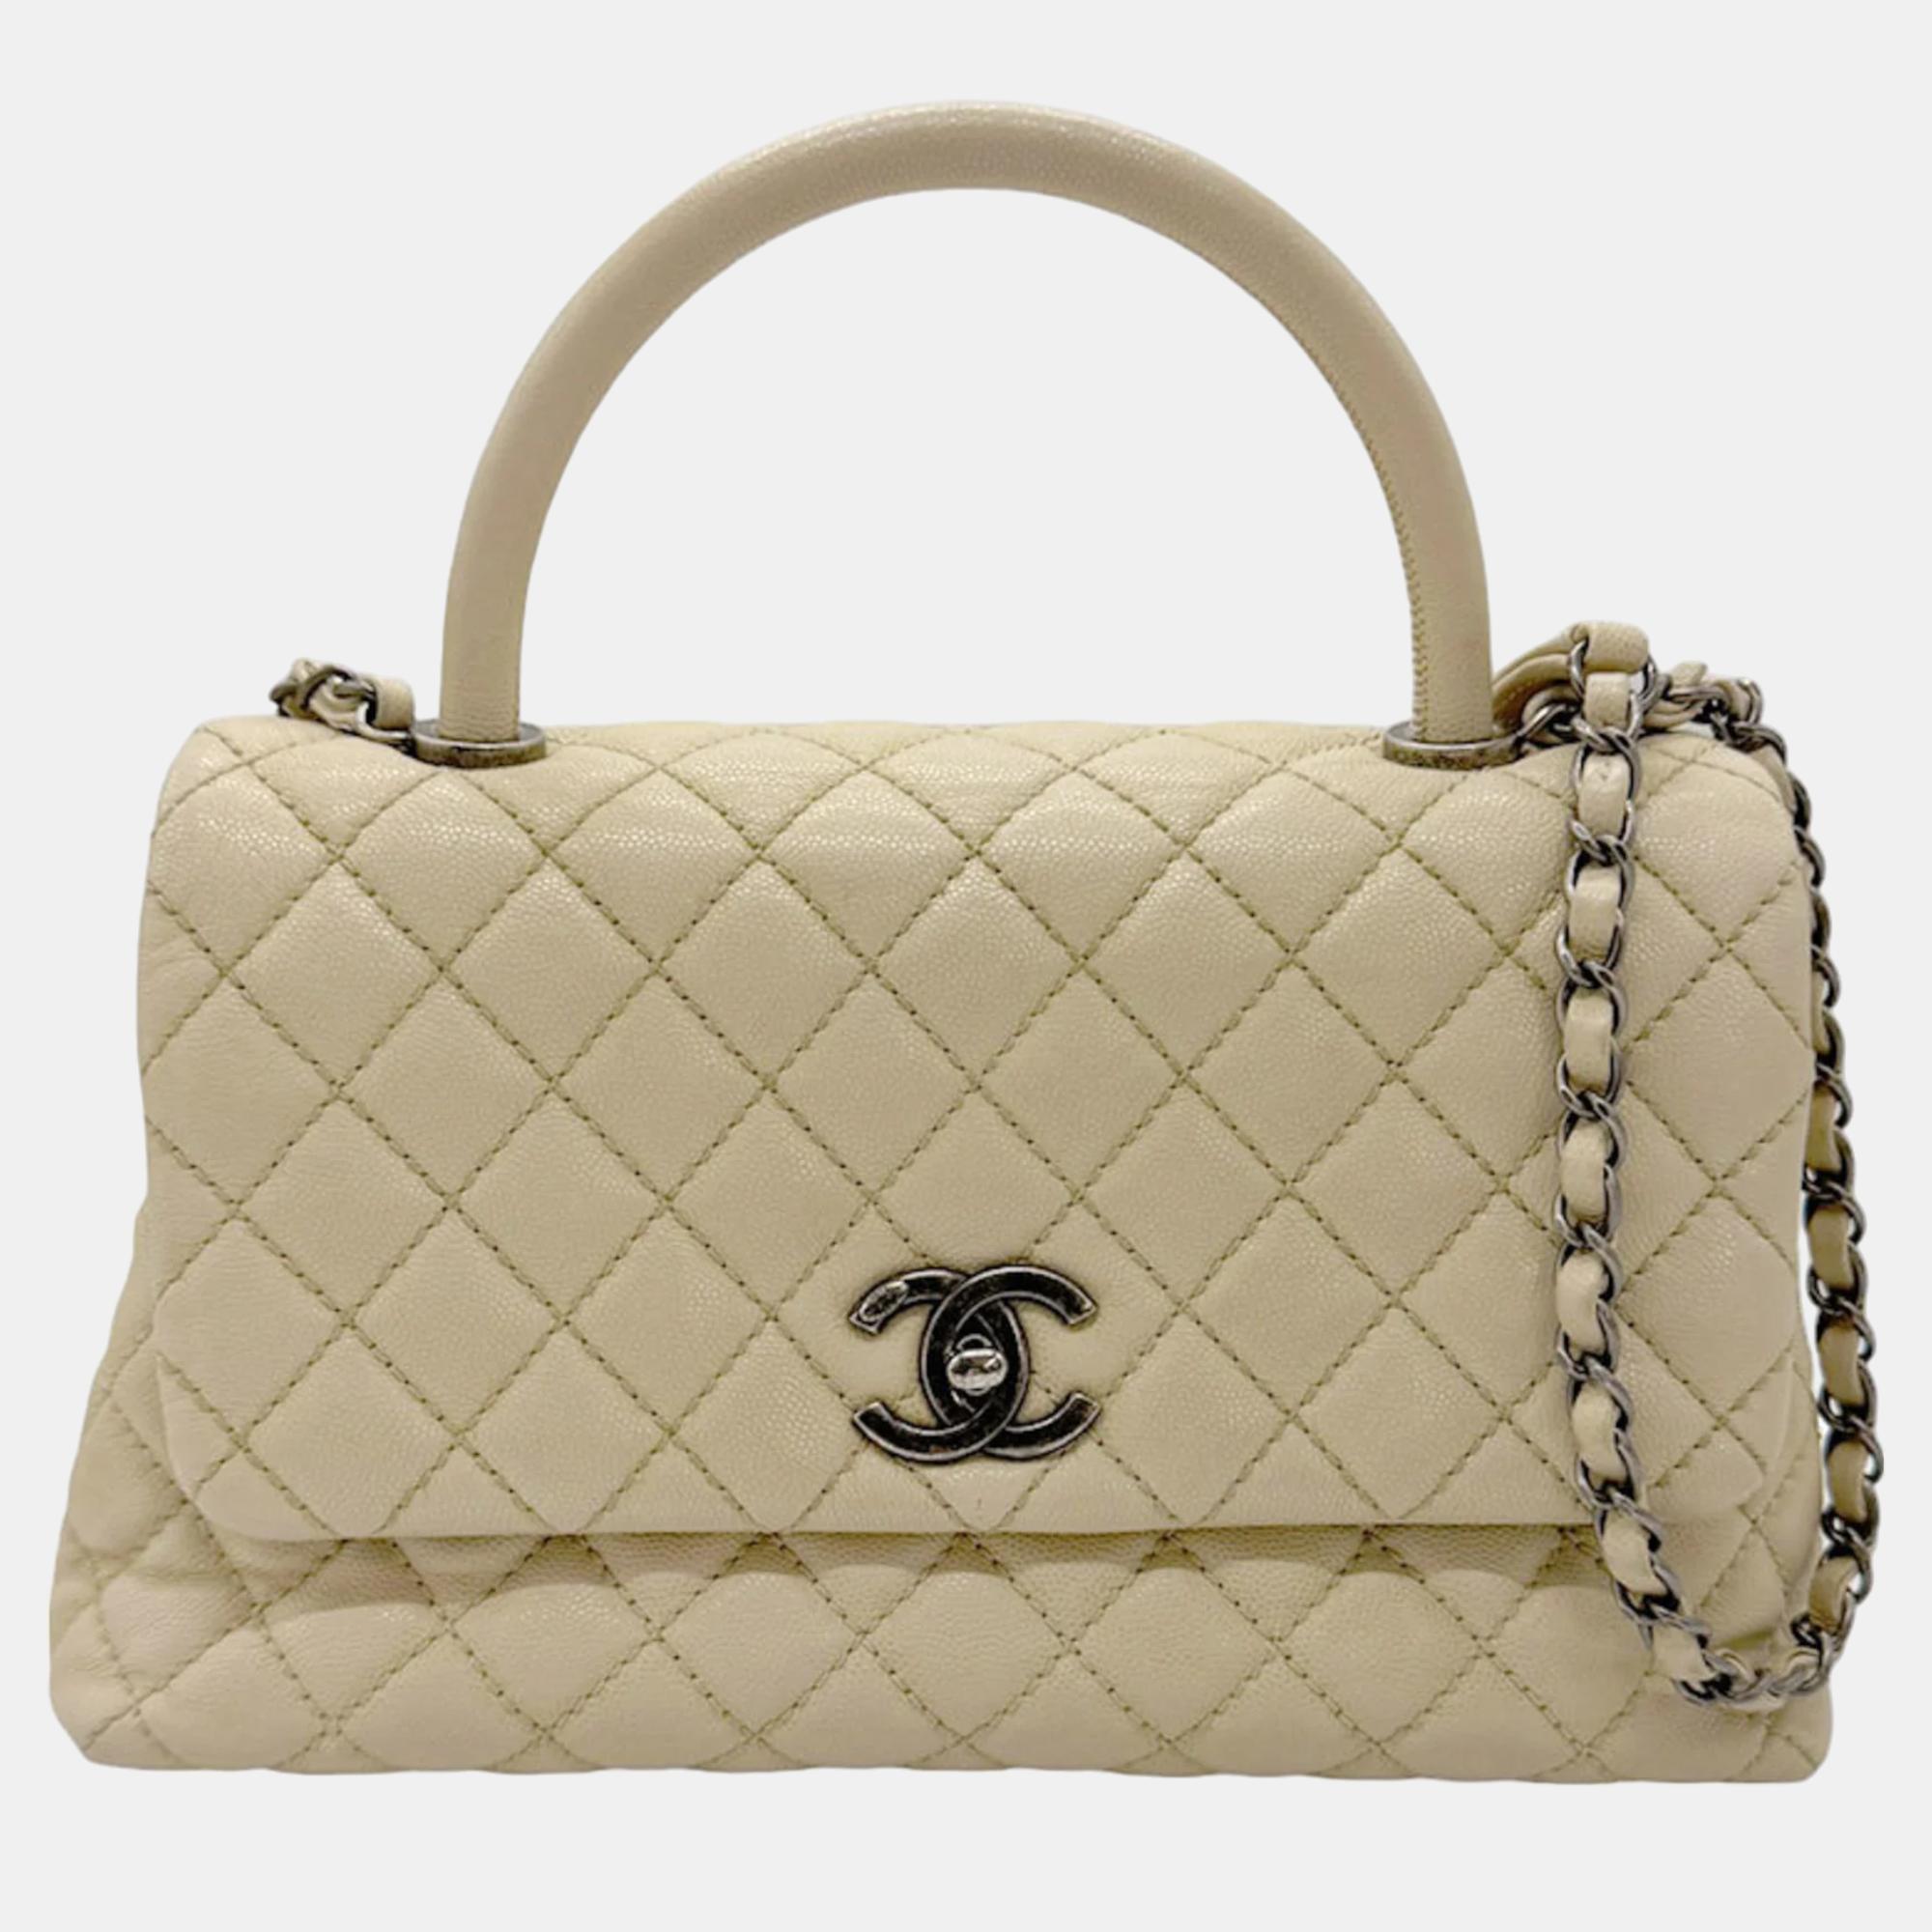 Chanel beige leather xs coco handle top handle bag